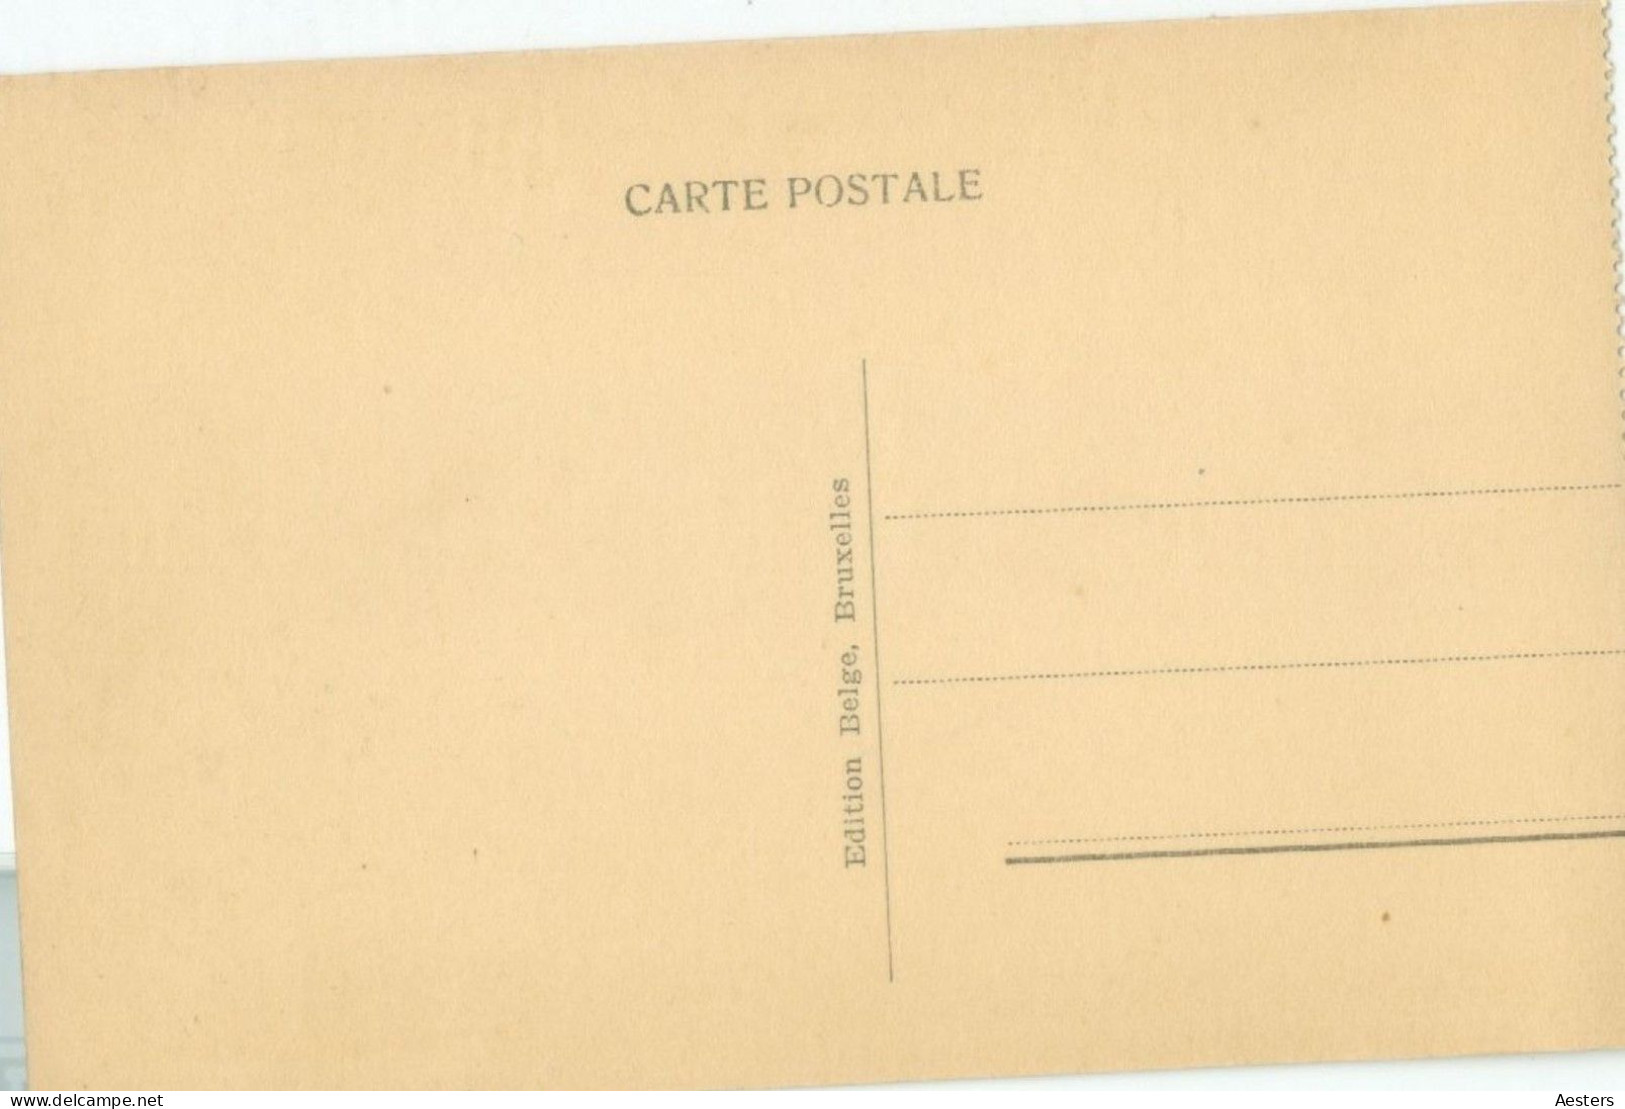 Waals-Brabant; Dongelberg, 12 Cartes Postales différentes - non voyagé. (24 scans)